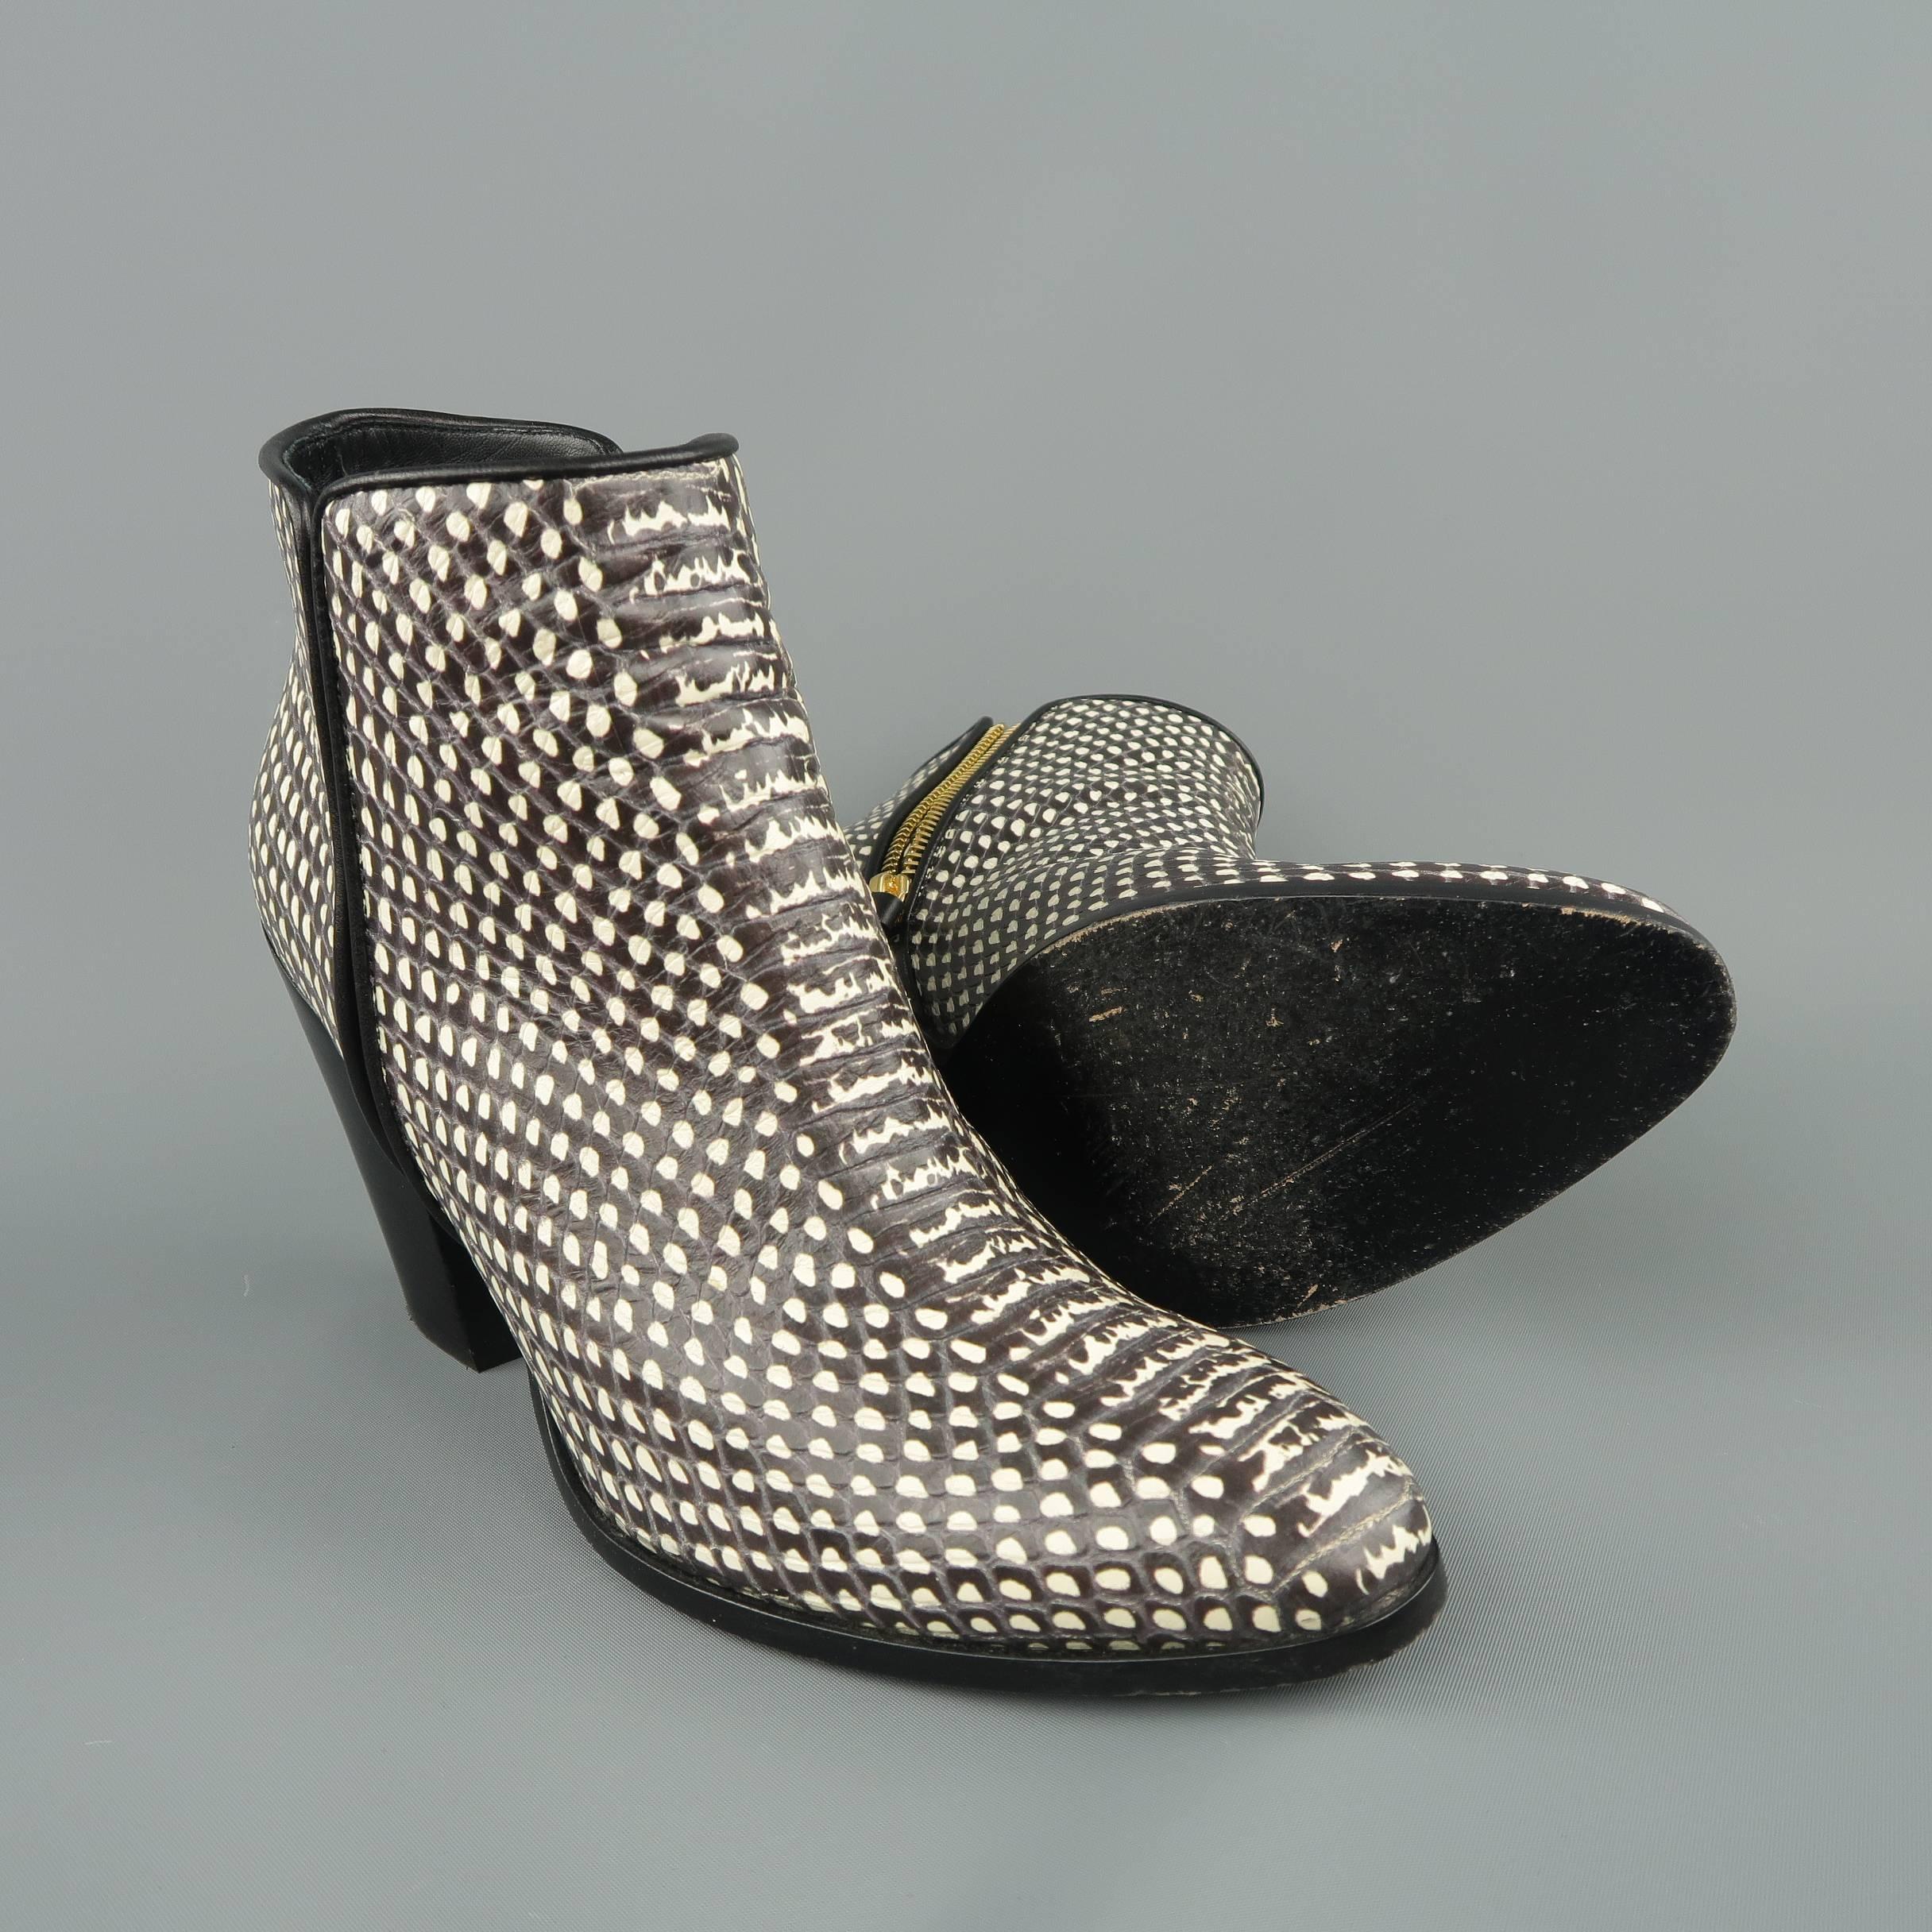 Women's GIUSEPPE ZANOTTI Size 7.5 Black & White Snake Leather Ankle Boots